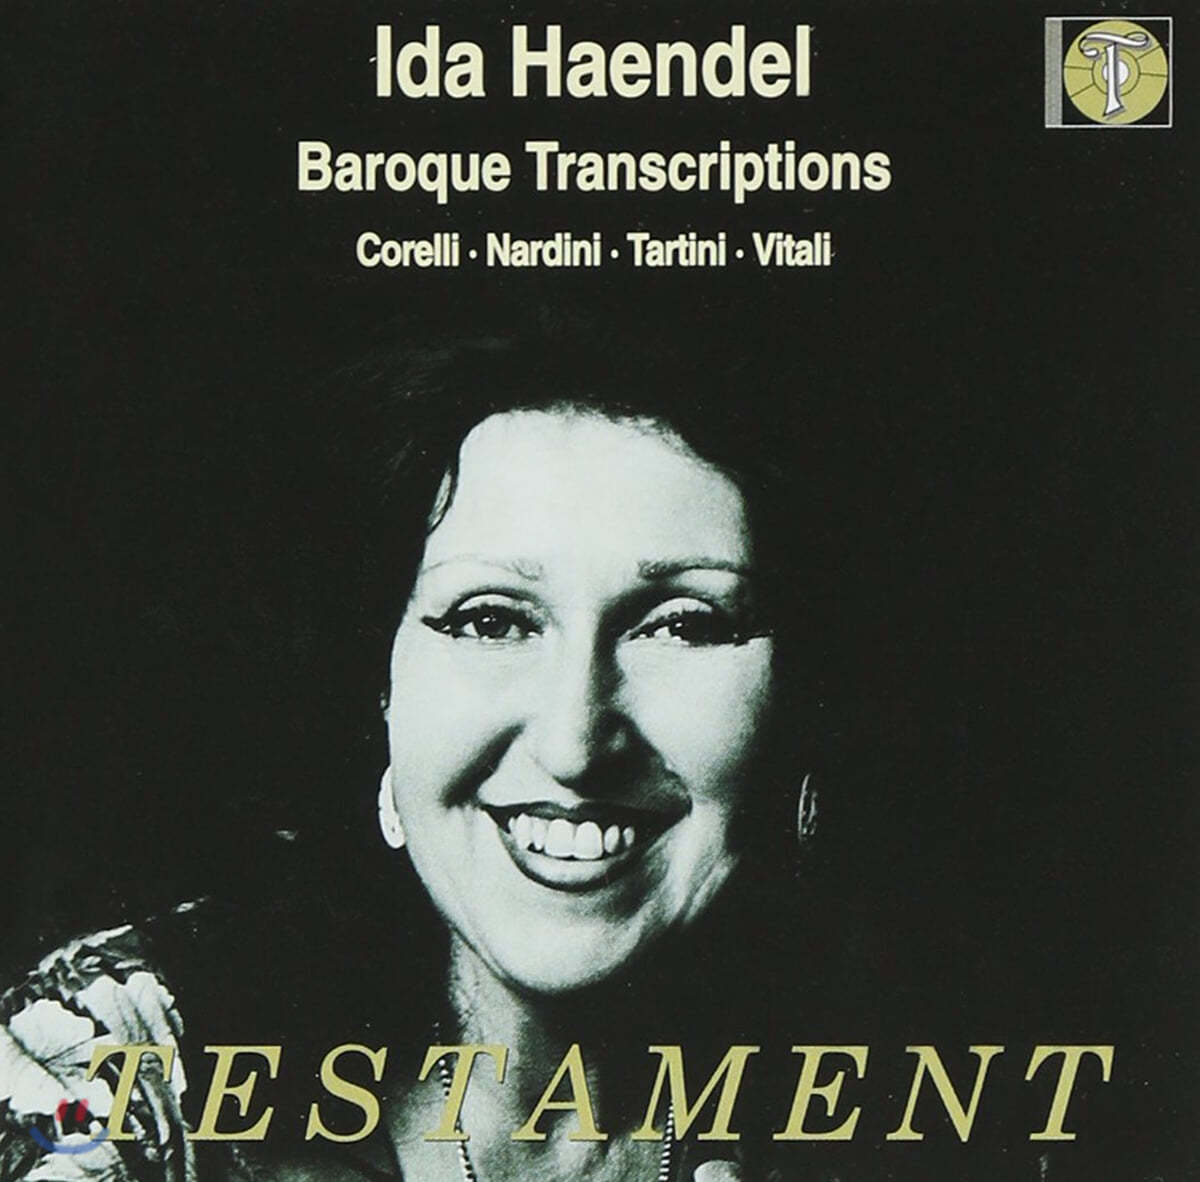 Ida Haendel 이다 헨델 바로크 명곡집 - 코렐리, 타르티니, 비탈리 외 (Baroque Transcriptions)